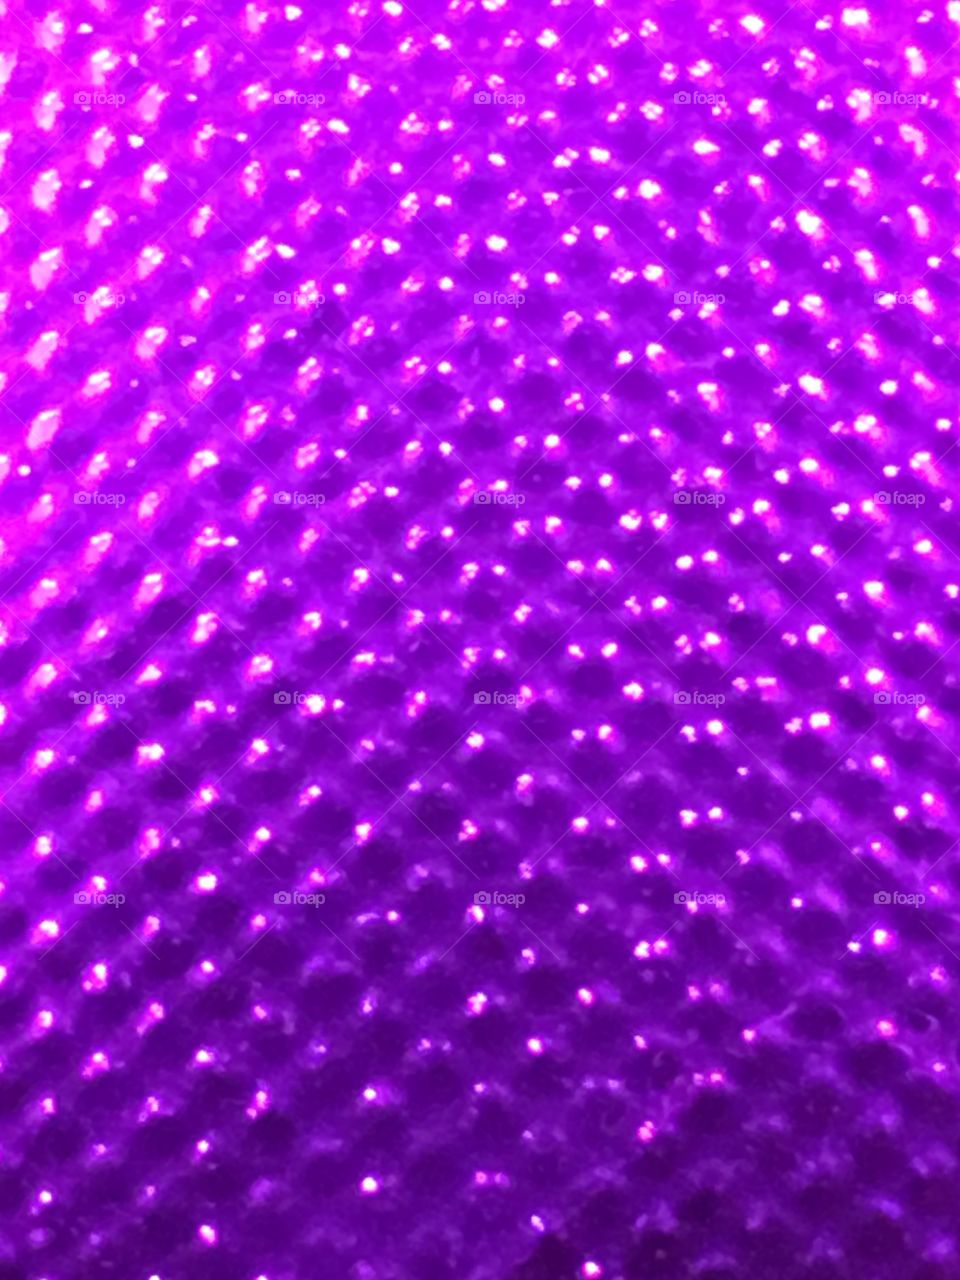 Texture Purple Bubbles

Bubble like purple texture in glass.